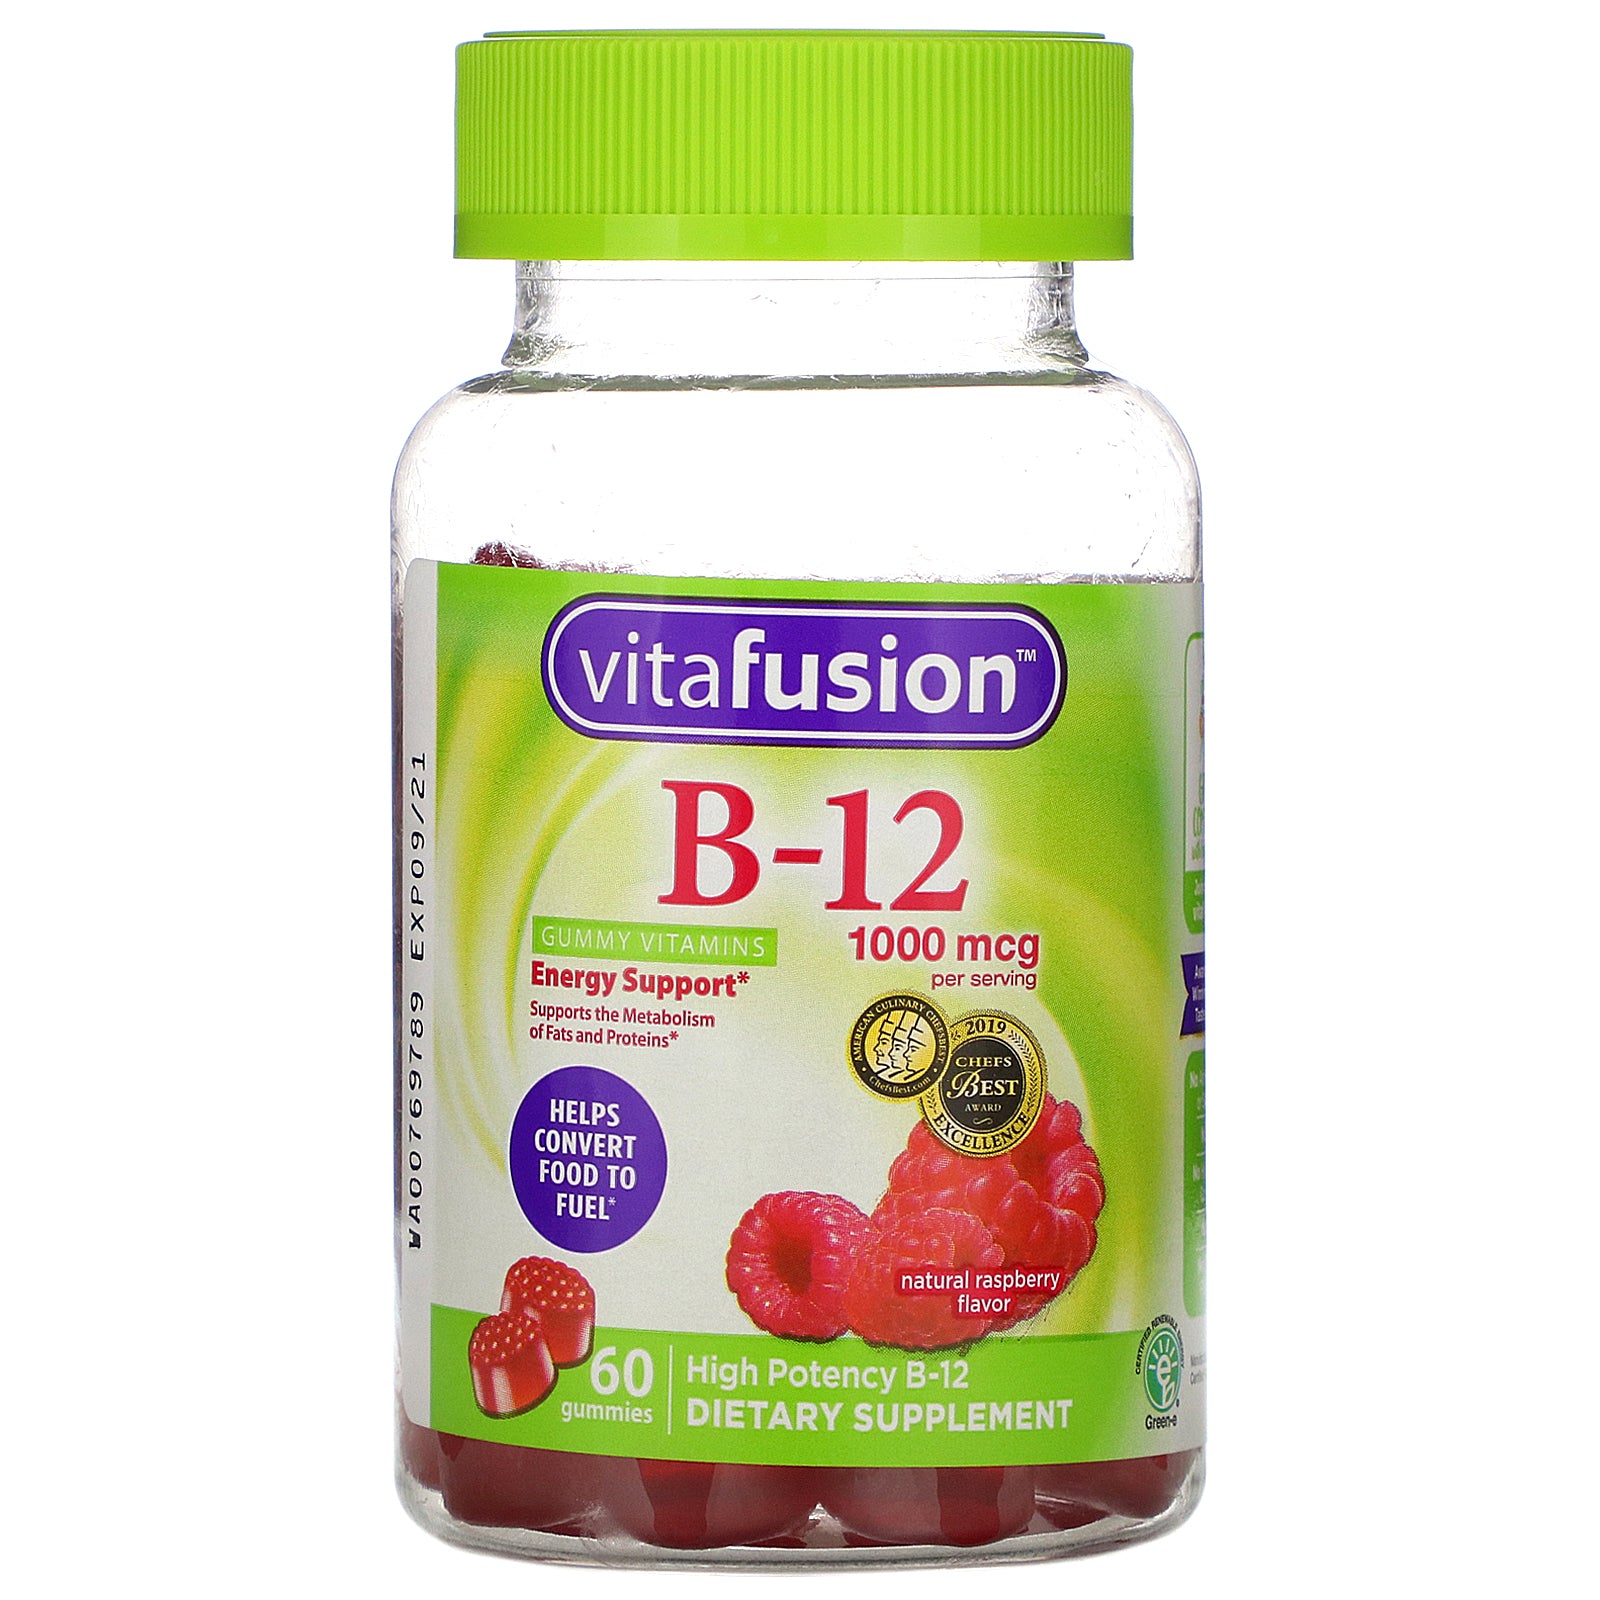 VitaFusion, B-12 Gummy Vitamins, Energy Support, Natural Raspberry Flavor, 1,000 mcg, 60 Gummies